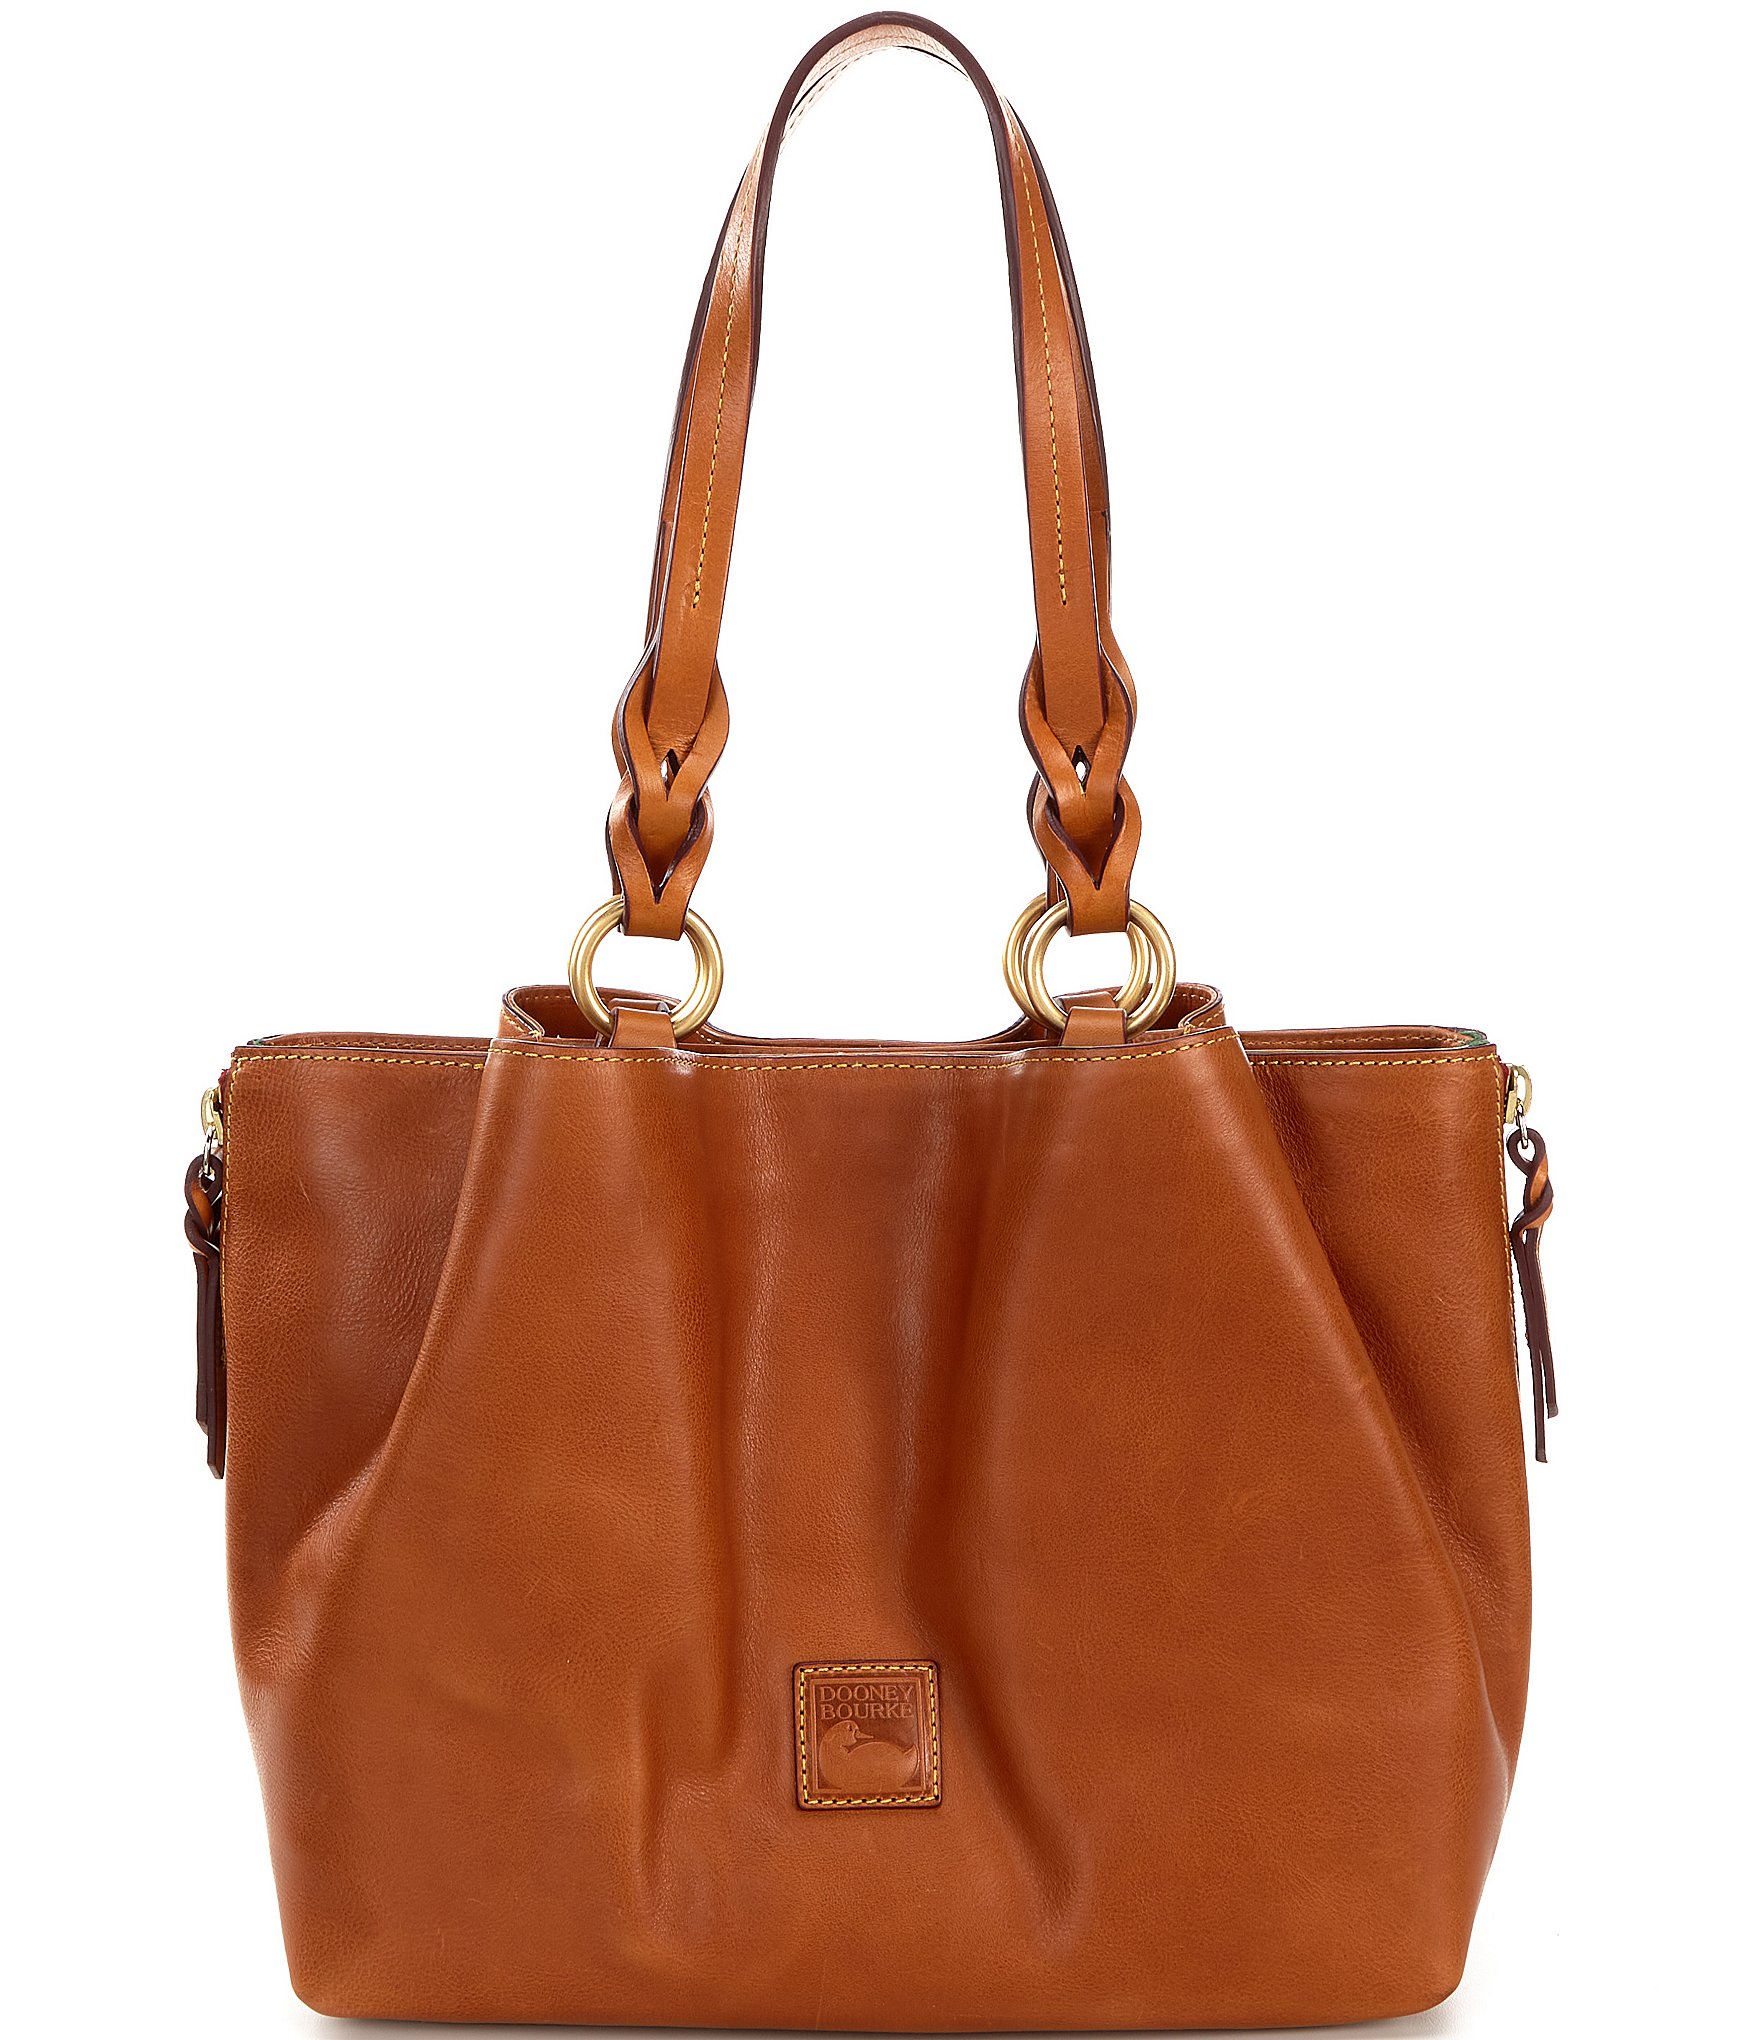 Best Dooney And Bourke Small Handbag for sale in Medford, Oregon